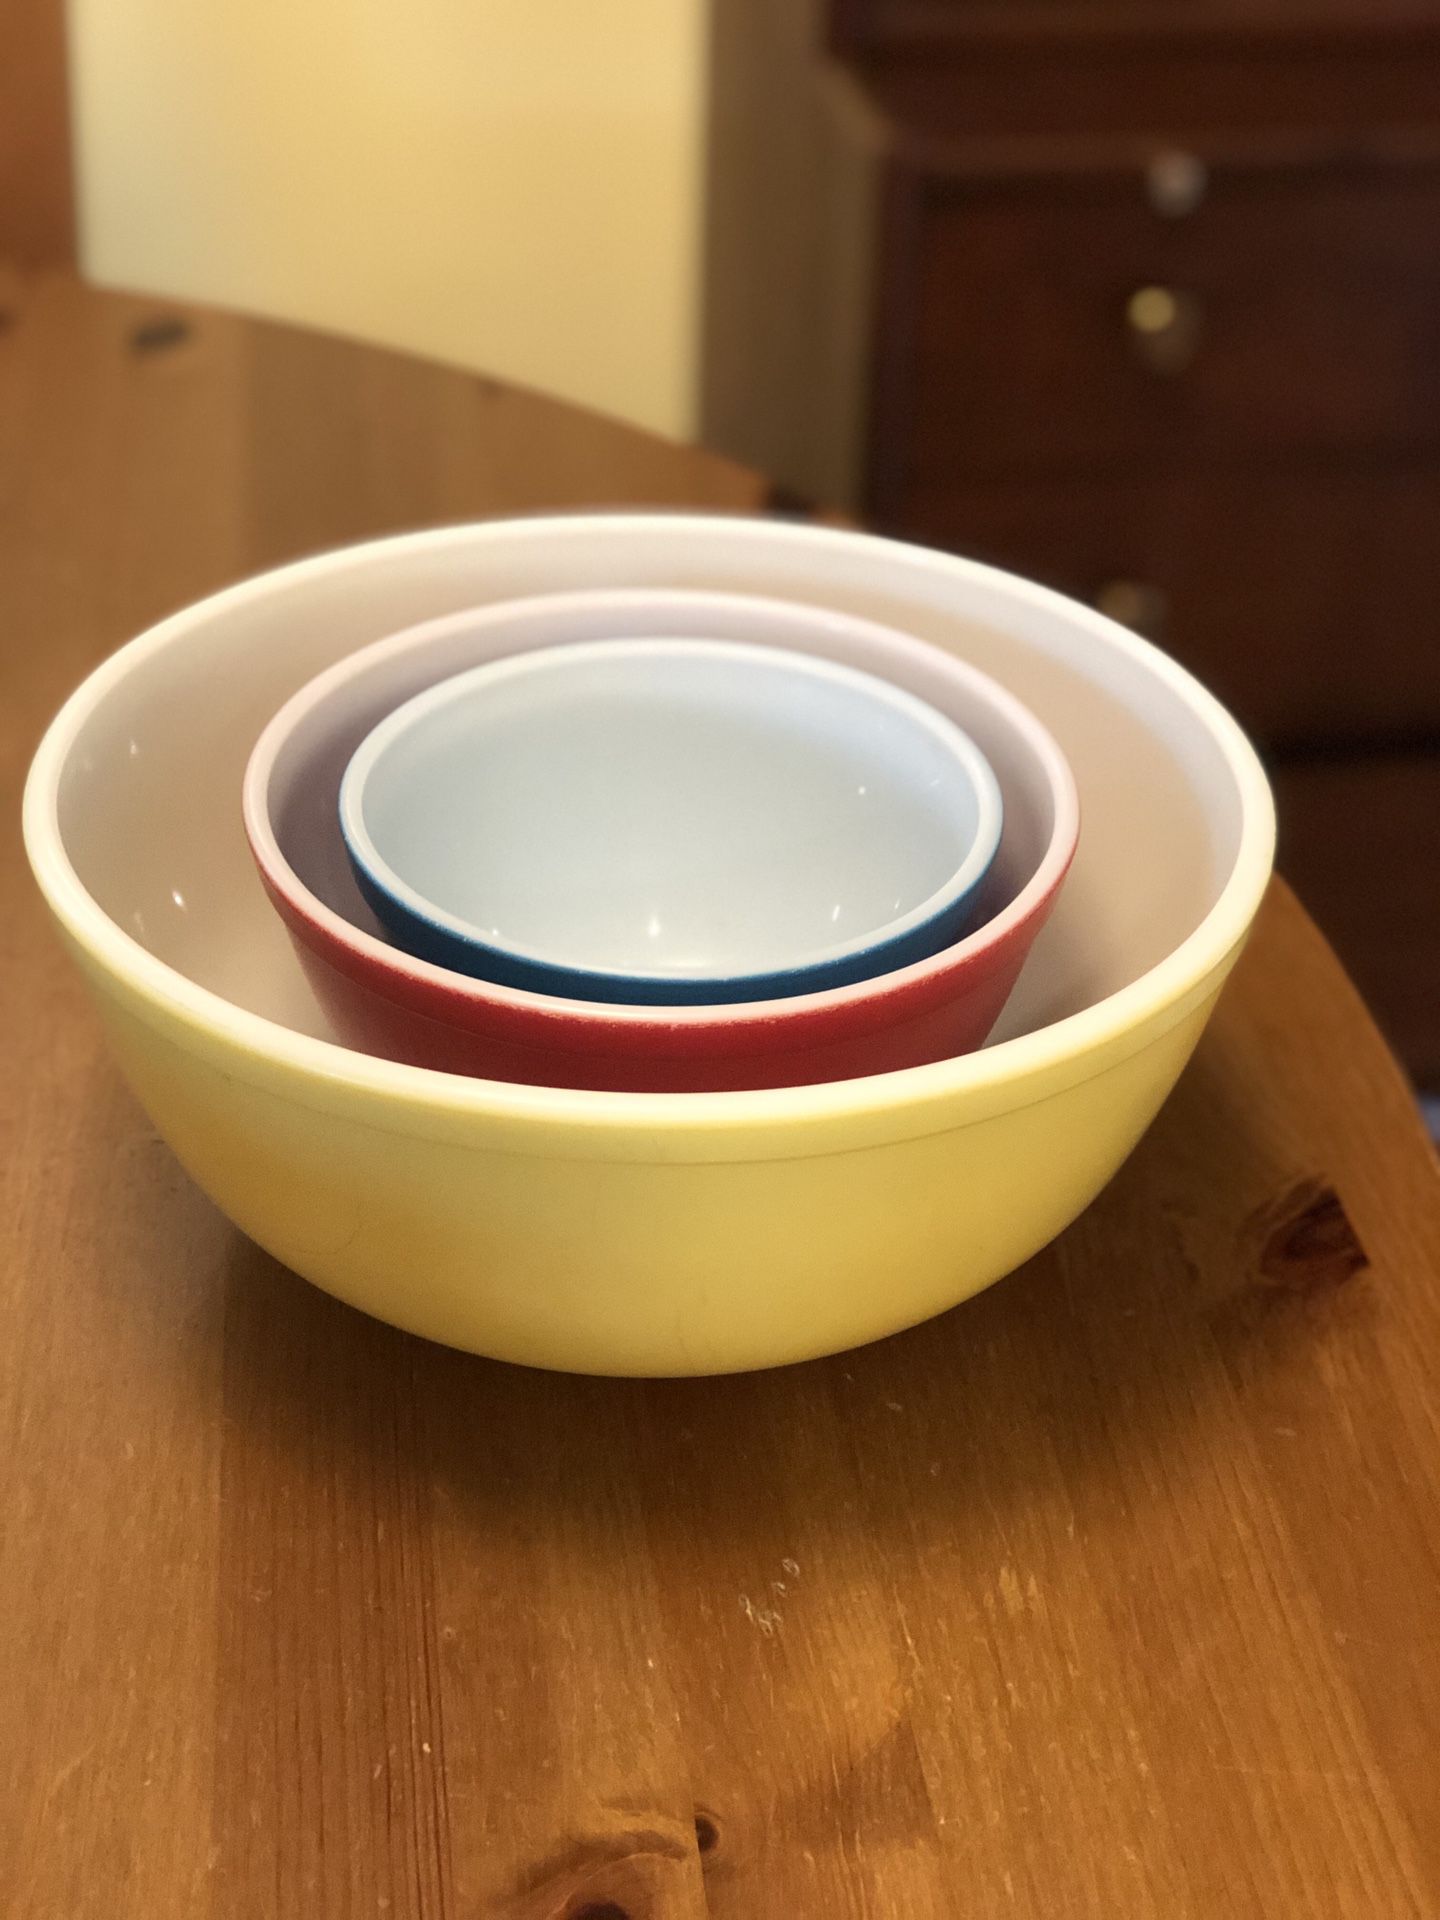 Vintage Pyrex nesting bowls